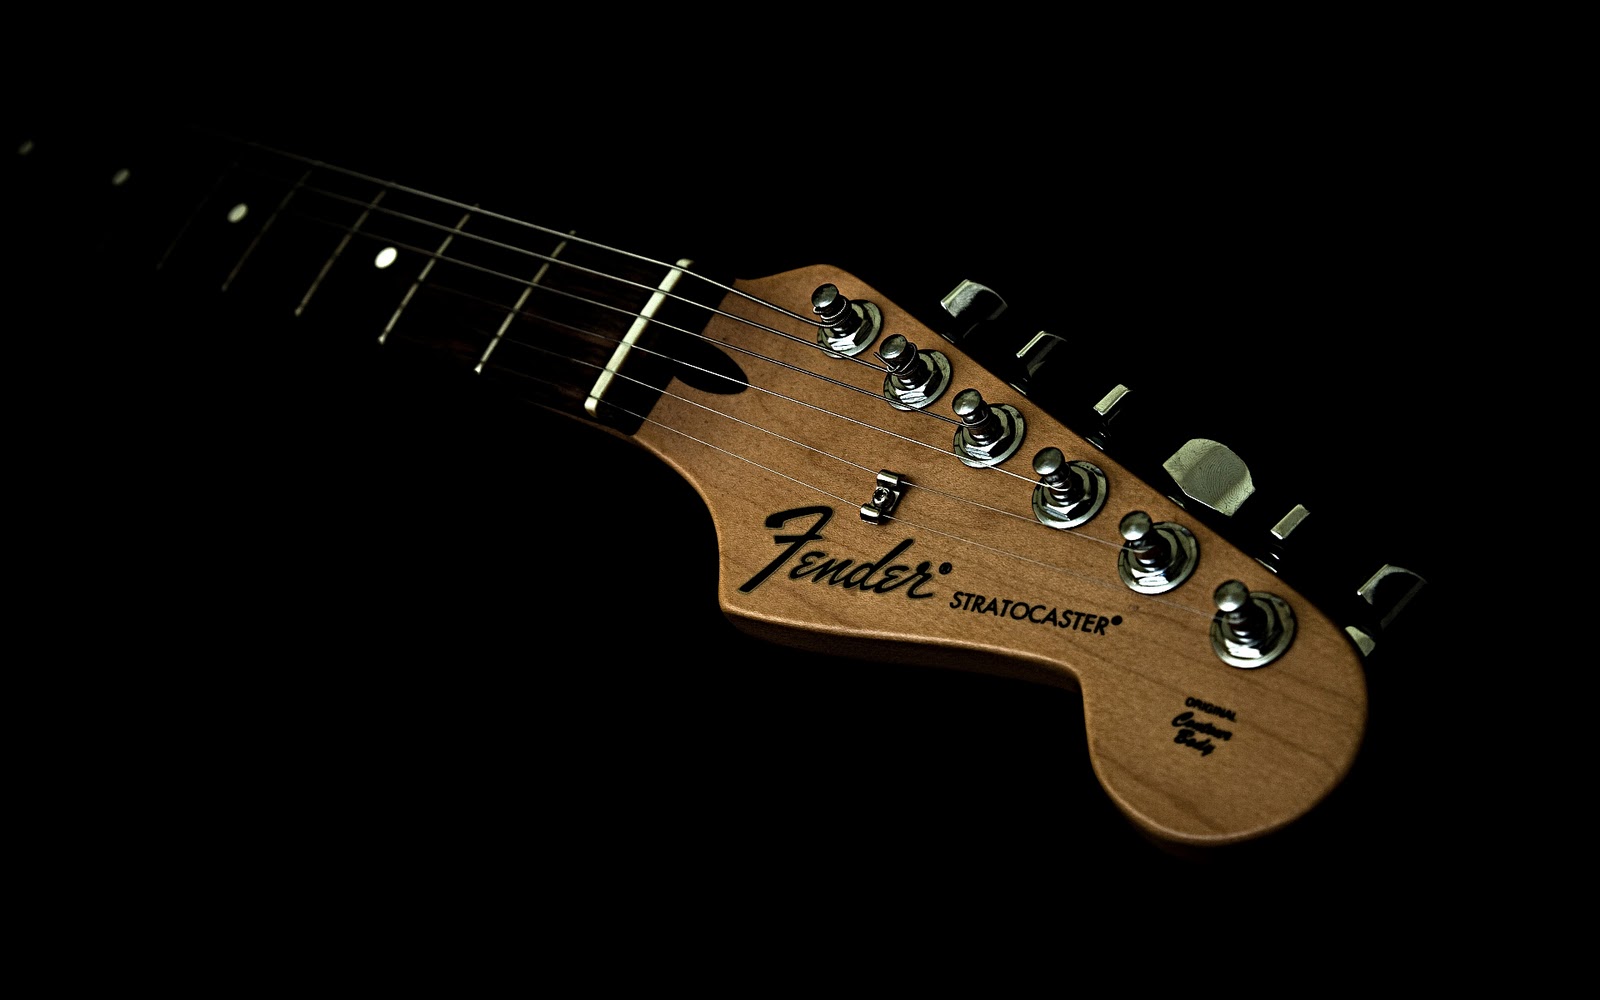 Fender Guitar Wallpapers For Desktop Images amp Pictures   Becuo